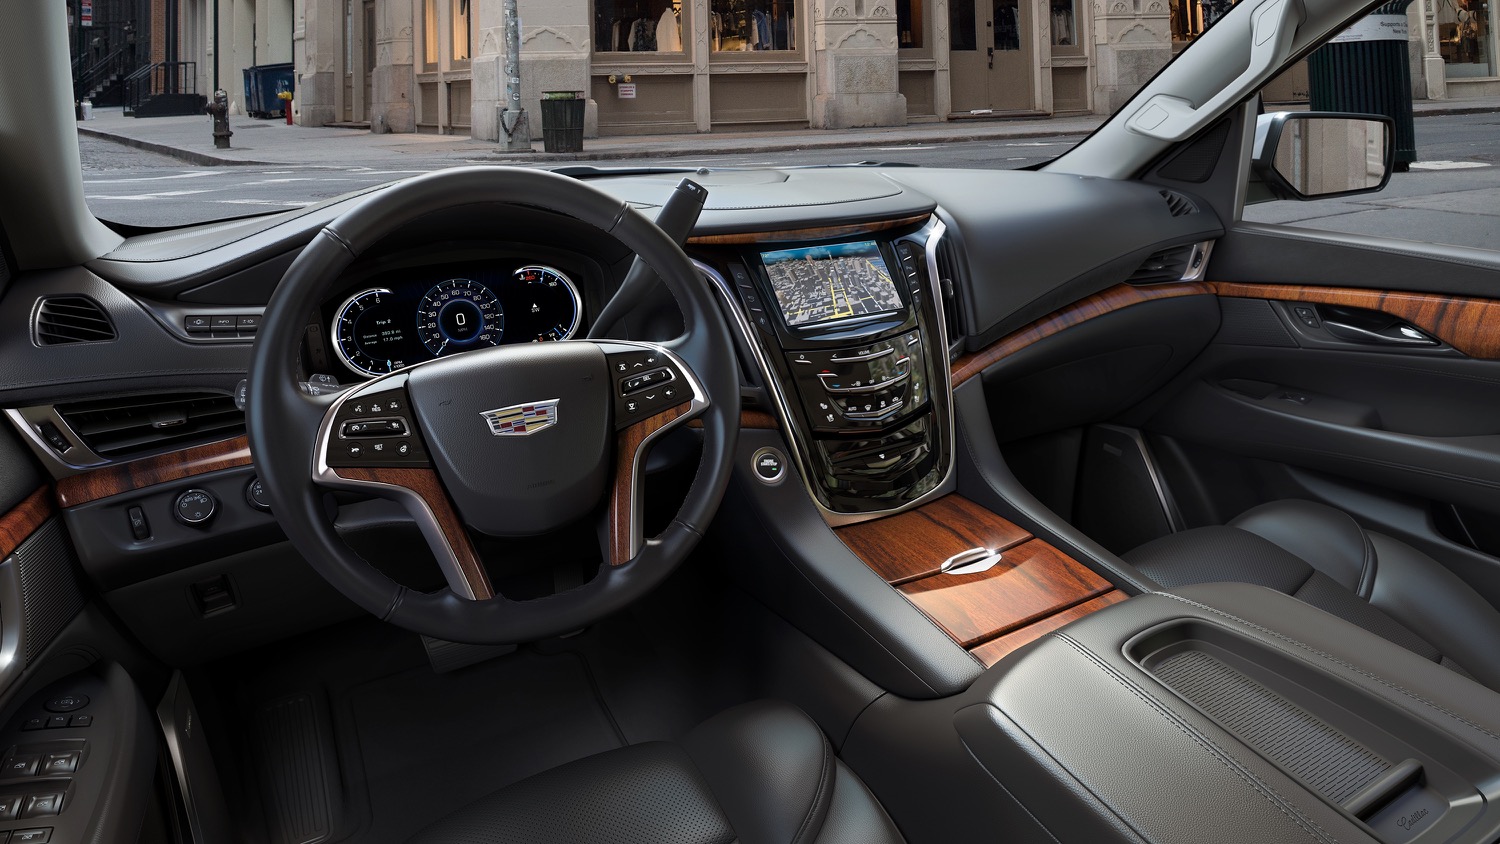 2018 Cadillac Escalade Interior Colors